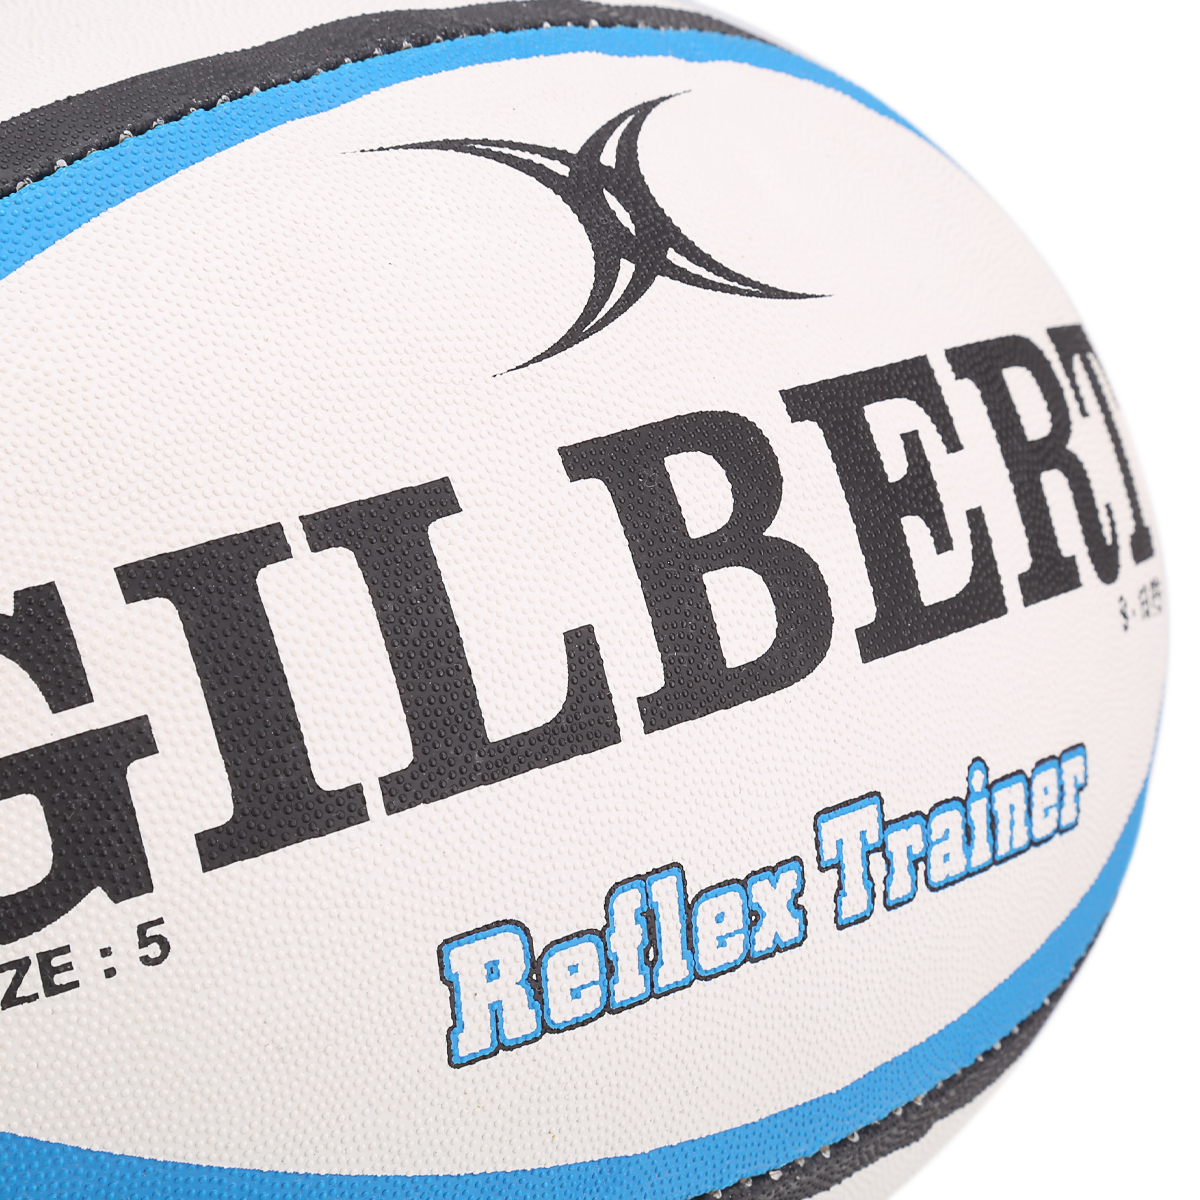 Pelota Gilbert Reflex Rugby,  image number null